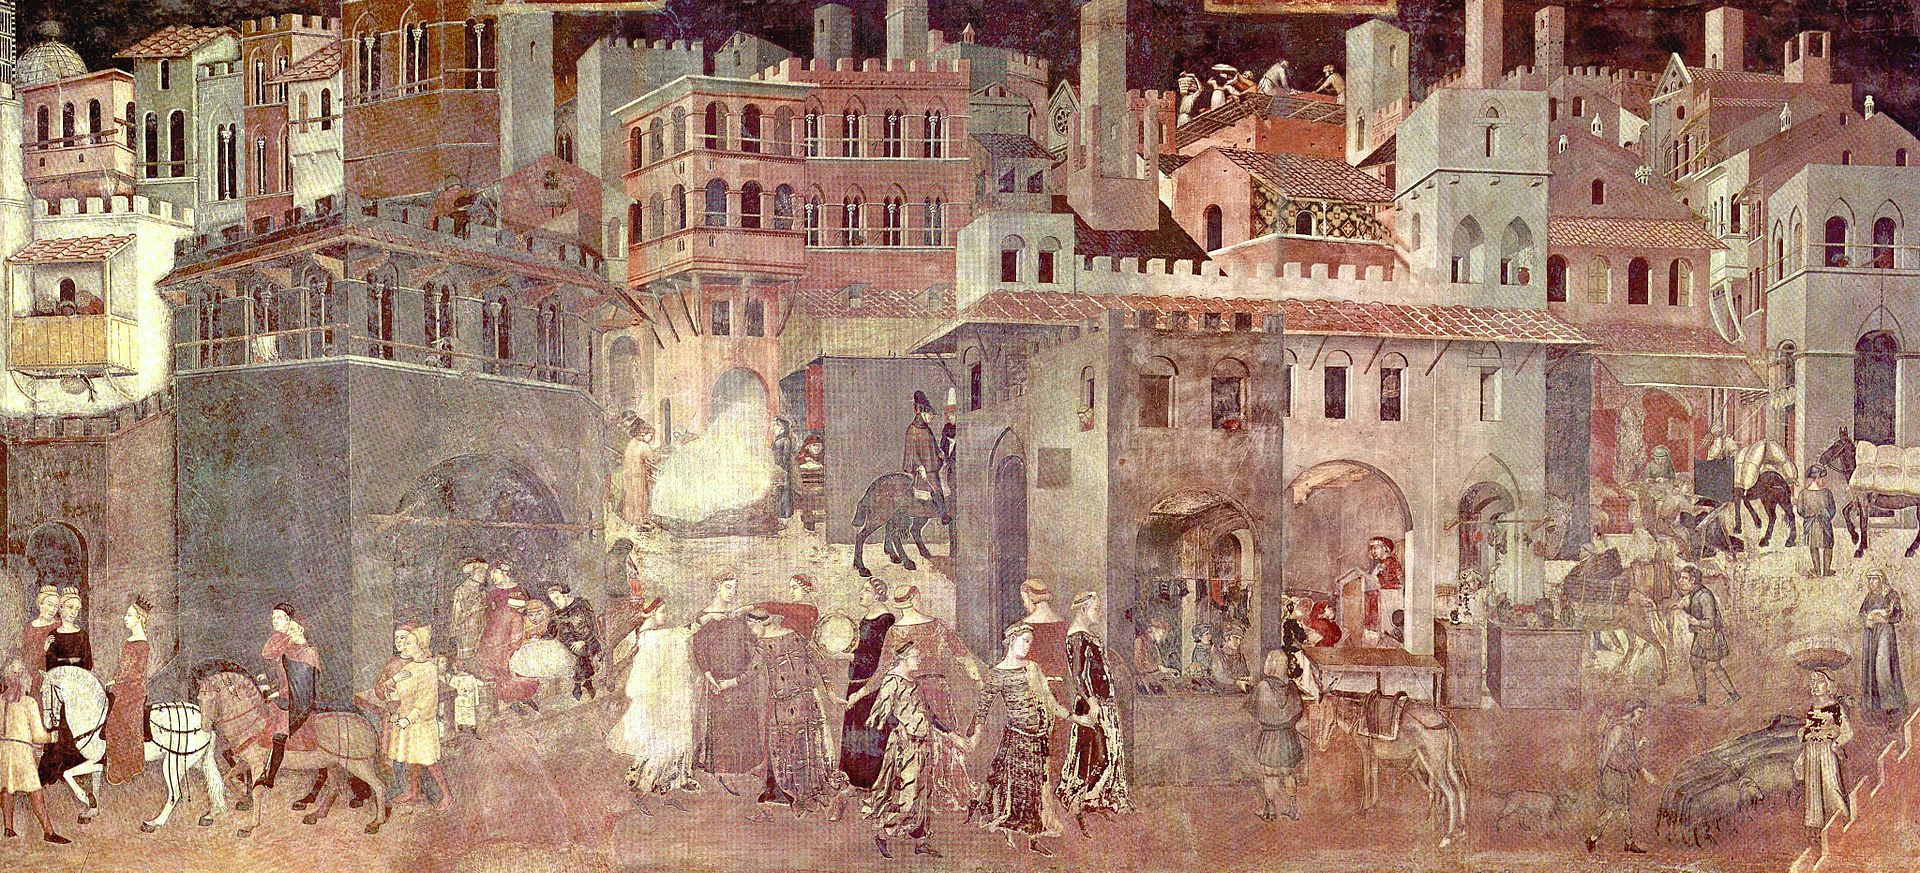 Ambrogio_Lorenzetti_Allegory_of_Good_Govt